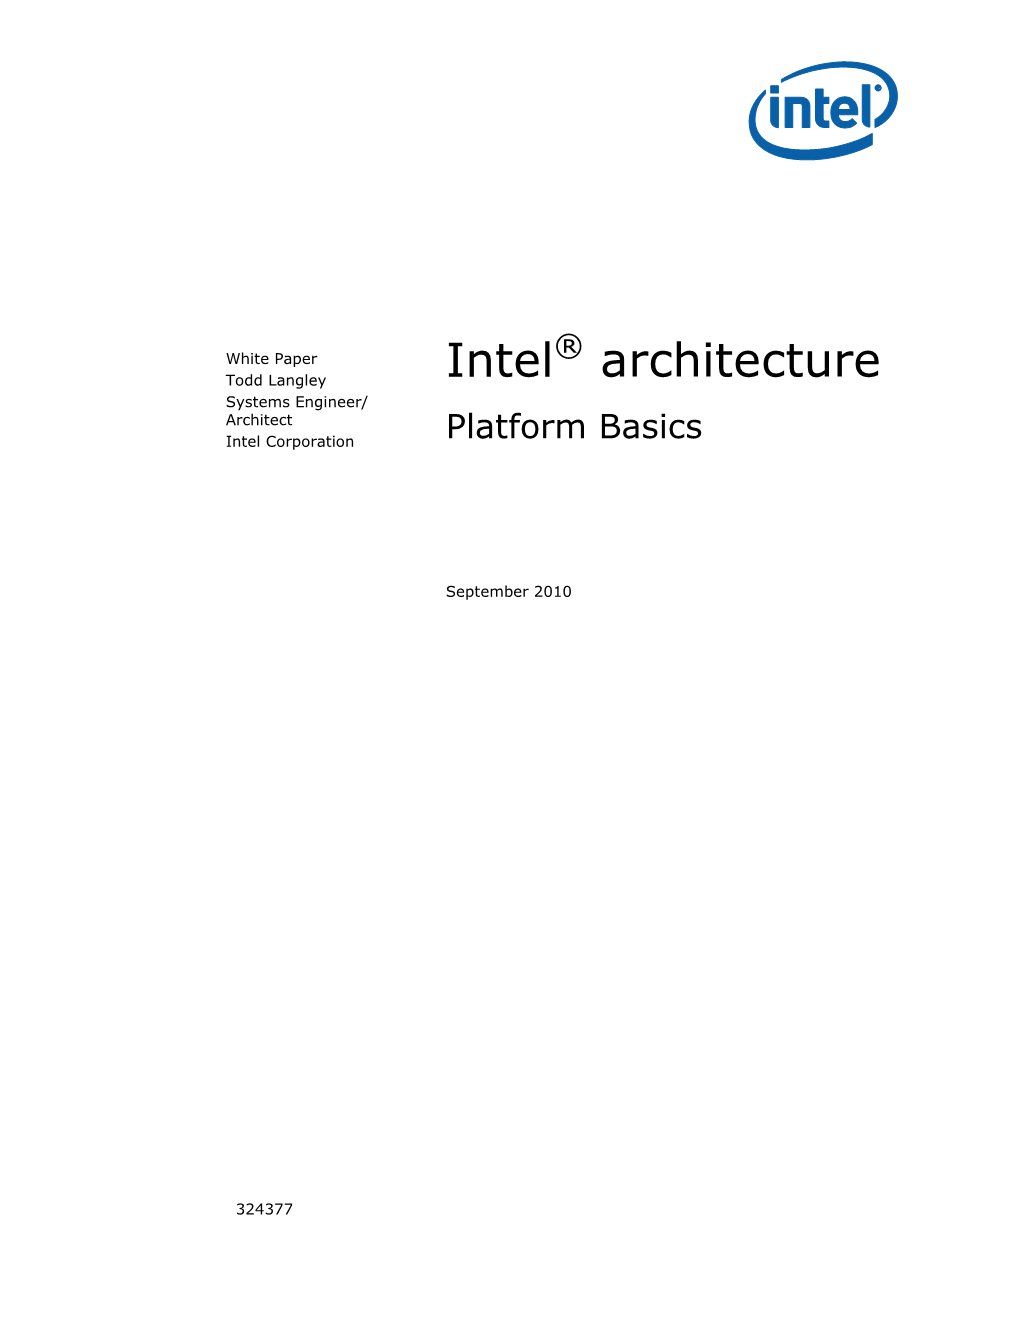 Intel Architecture Platform Basics